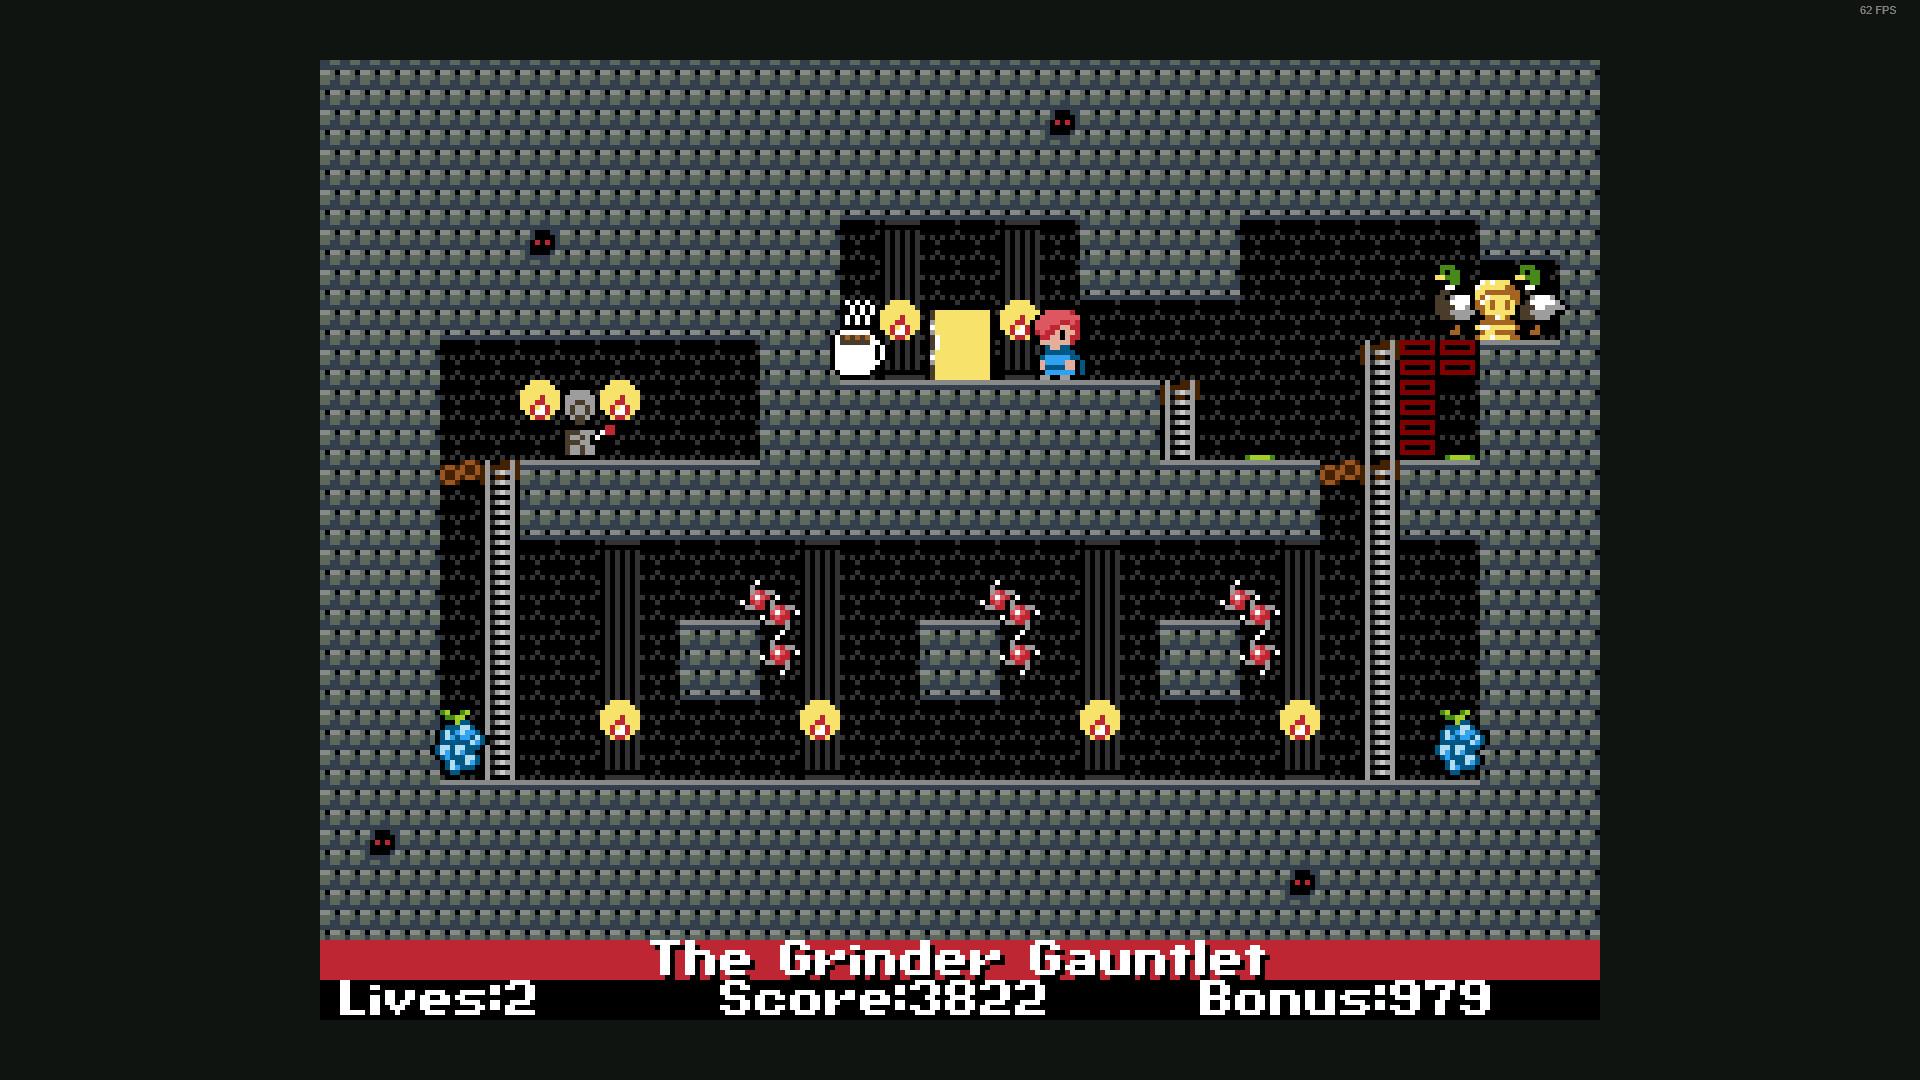 Screenshot №3 from game Rising Runner